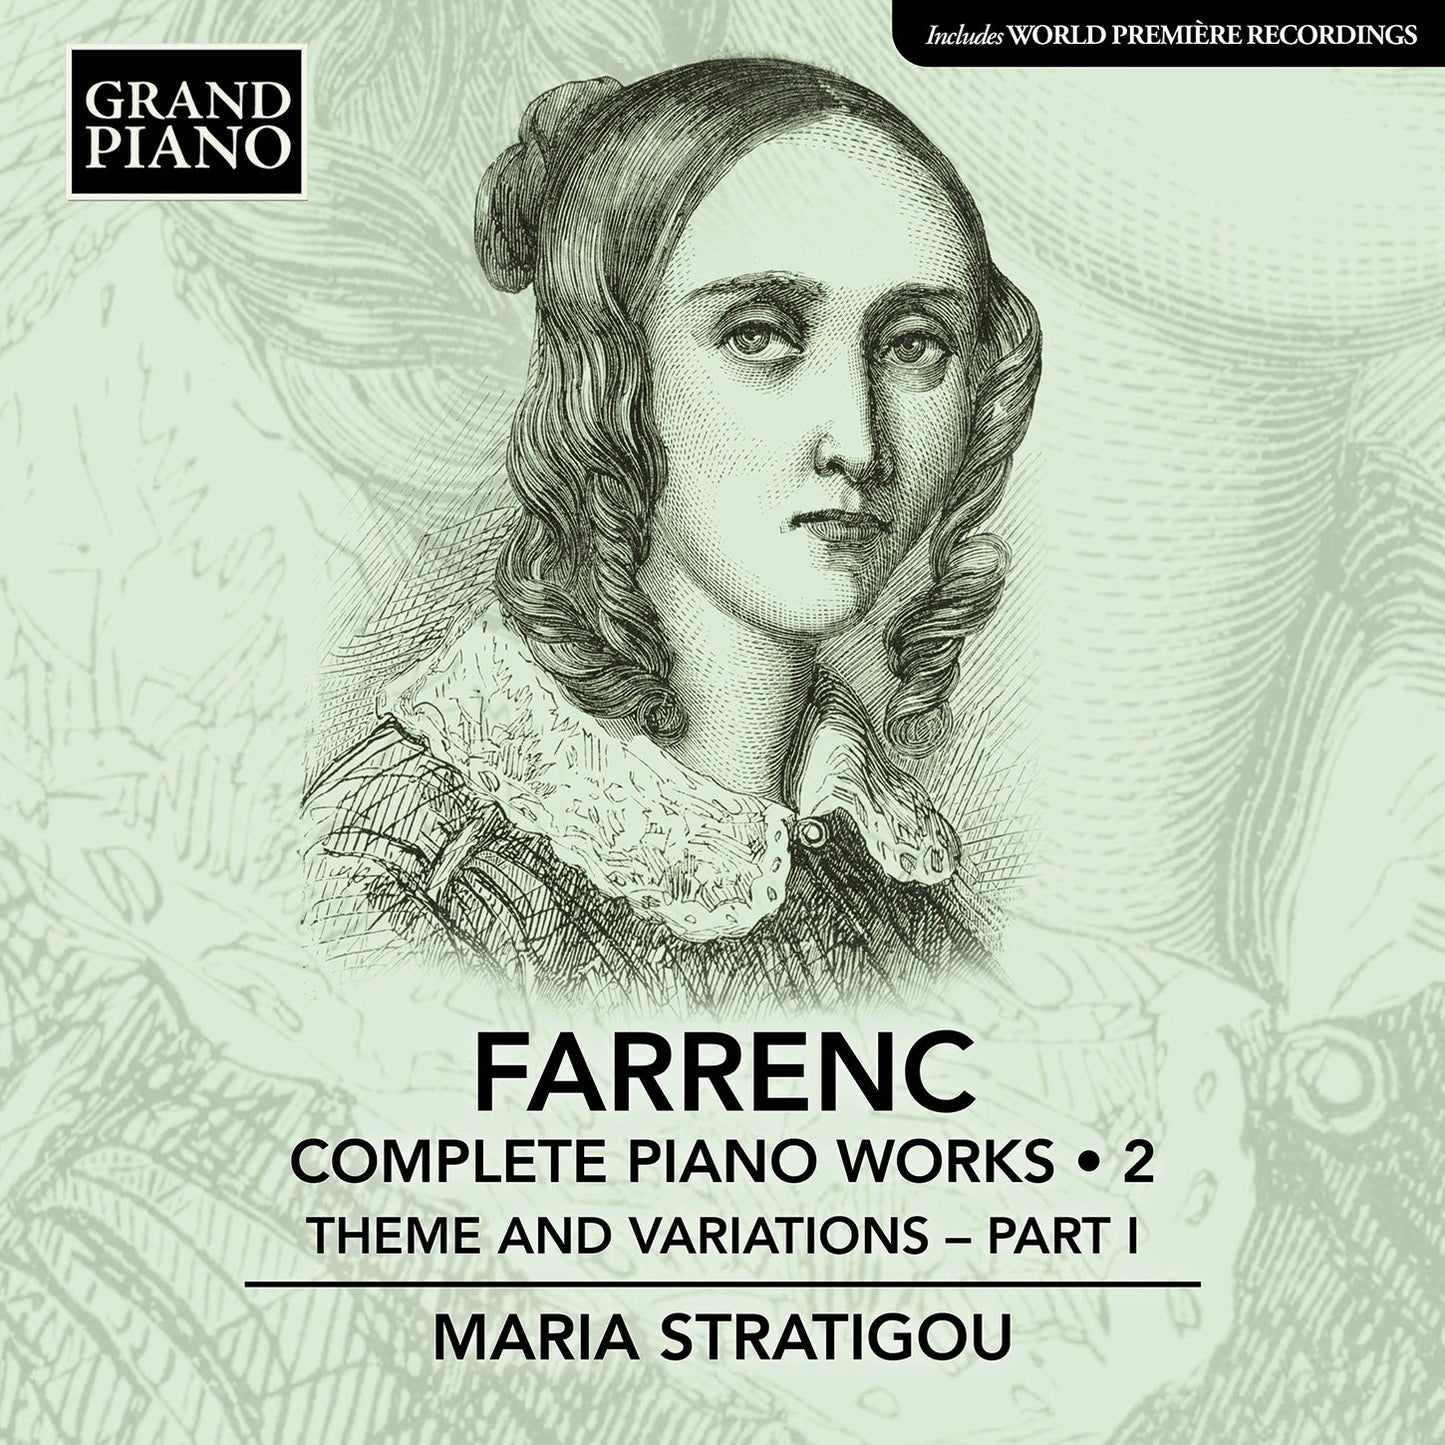 Farrenc: Complete Piano Works, Vol. 2 - Variations Brillante